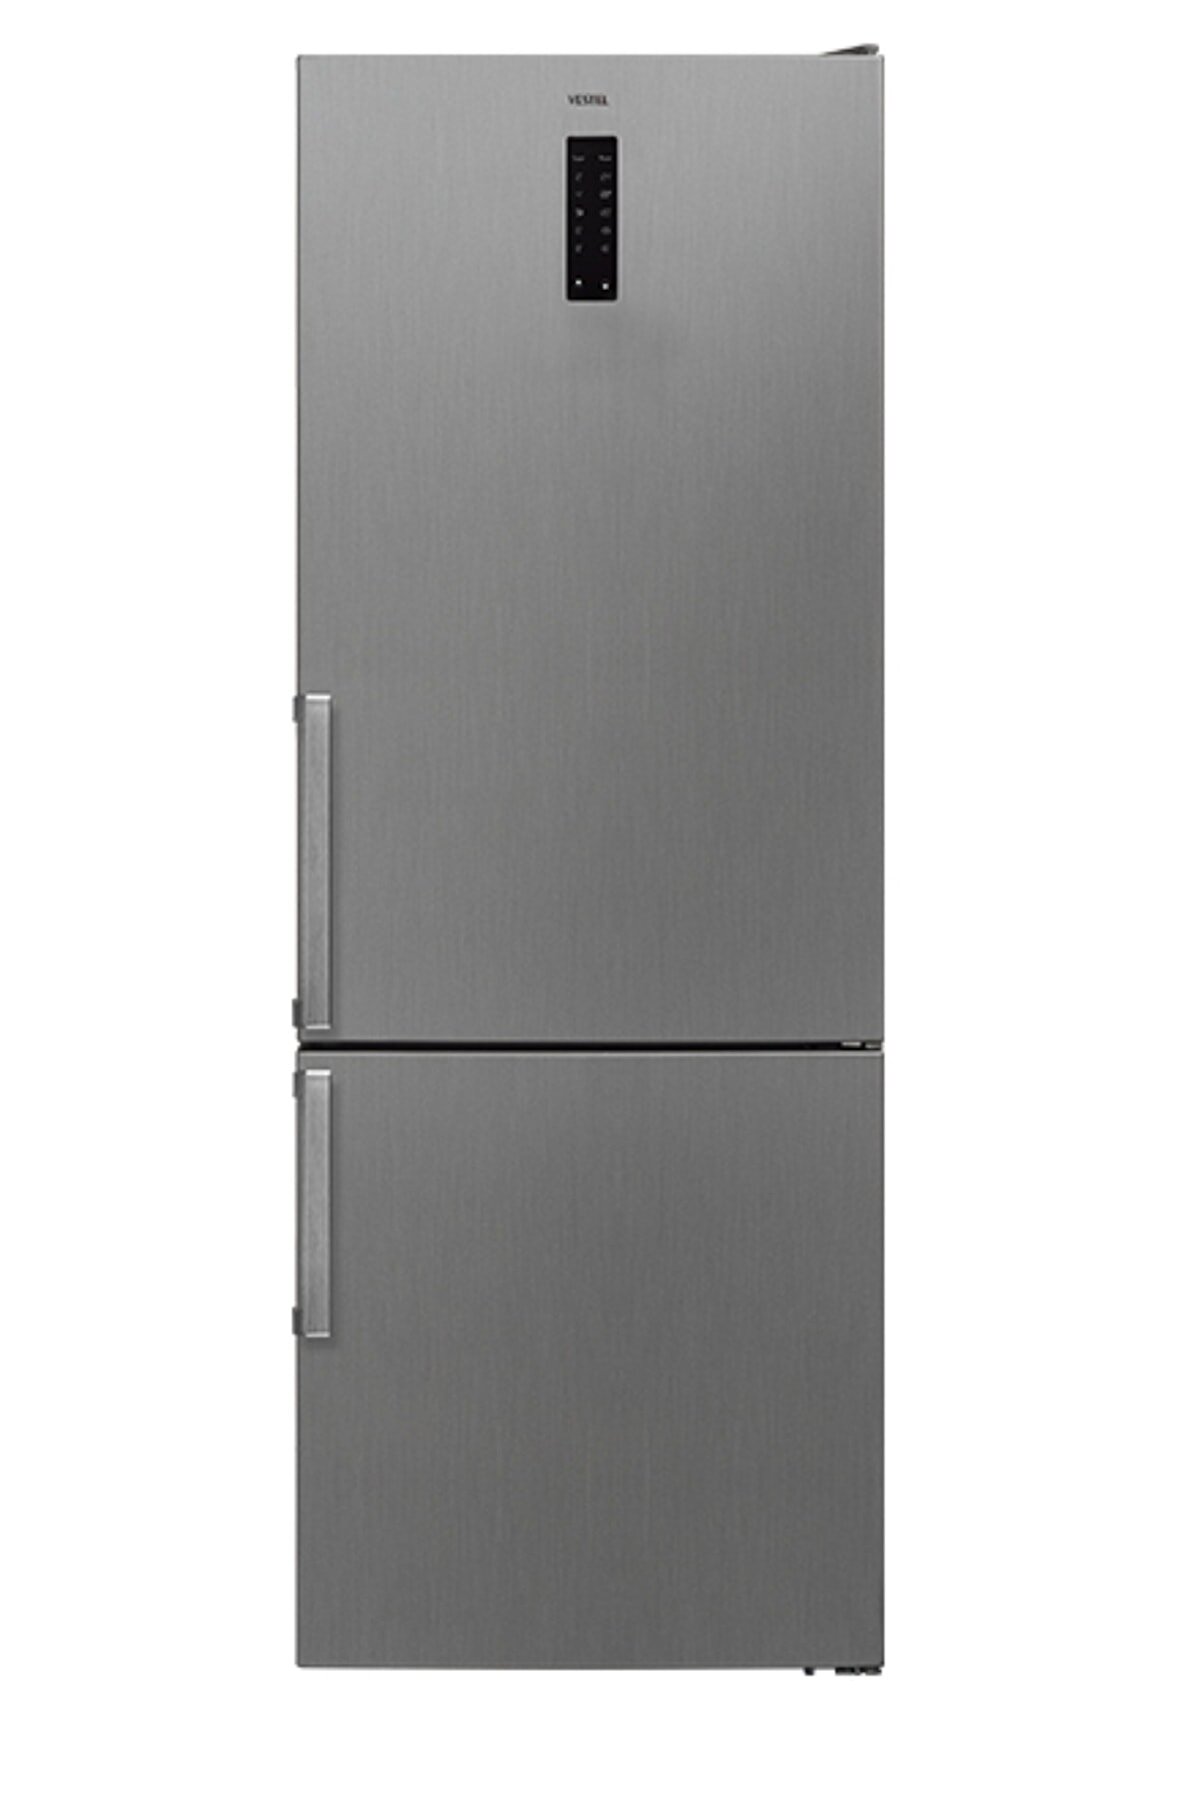 Regal NFK 54031 EIG 481 LT No-Frost Fridge freezer